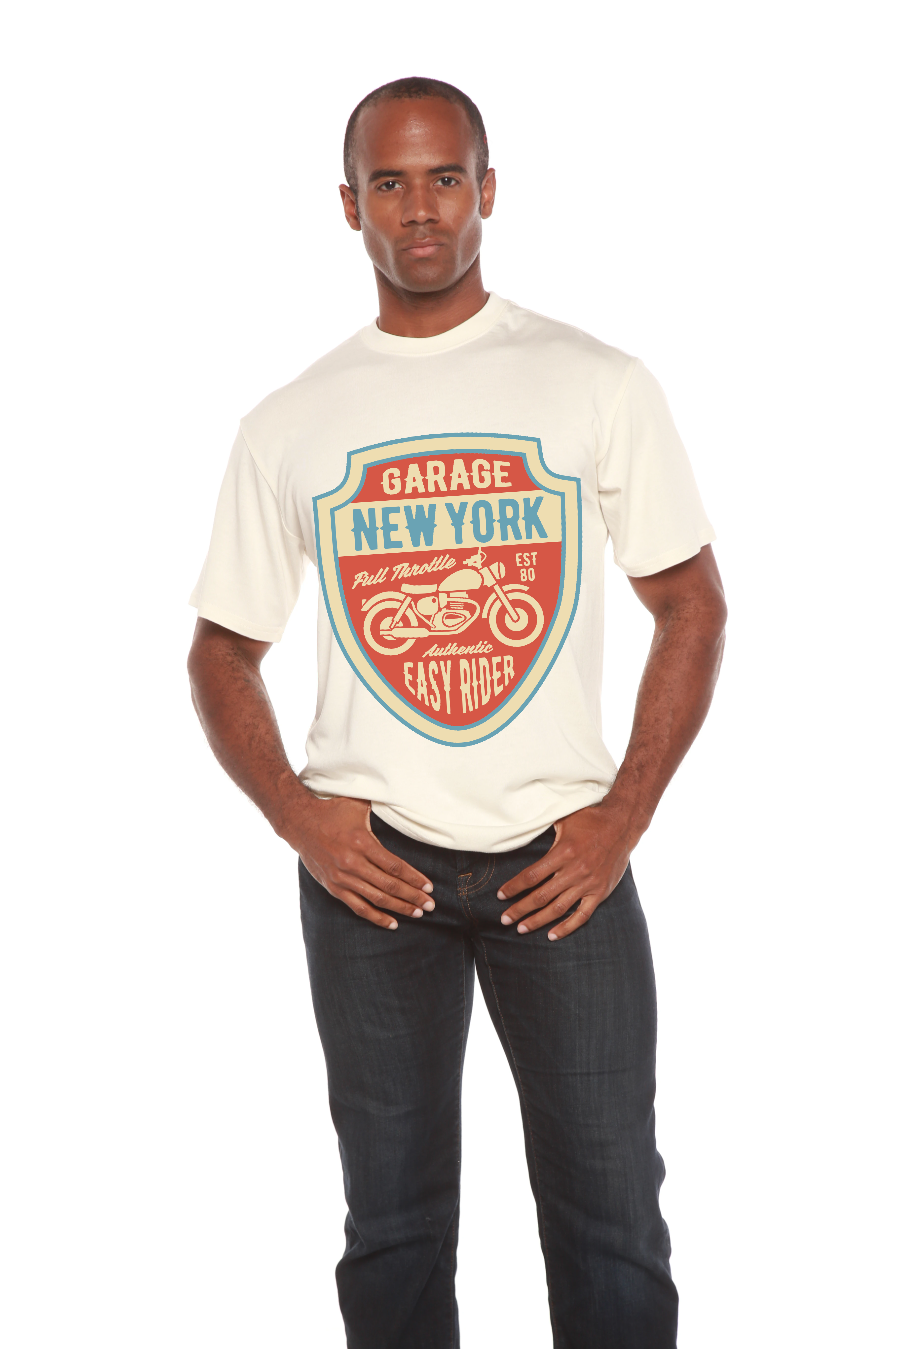 Garage New York Men's Bamboo Viscose/Organic Cotton Short Sleeve T-Shirt - Spun Bamboo